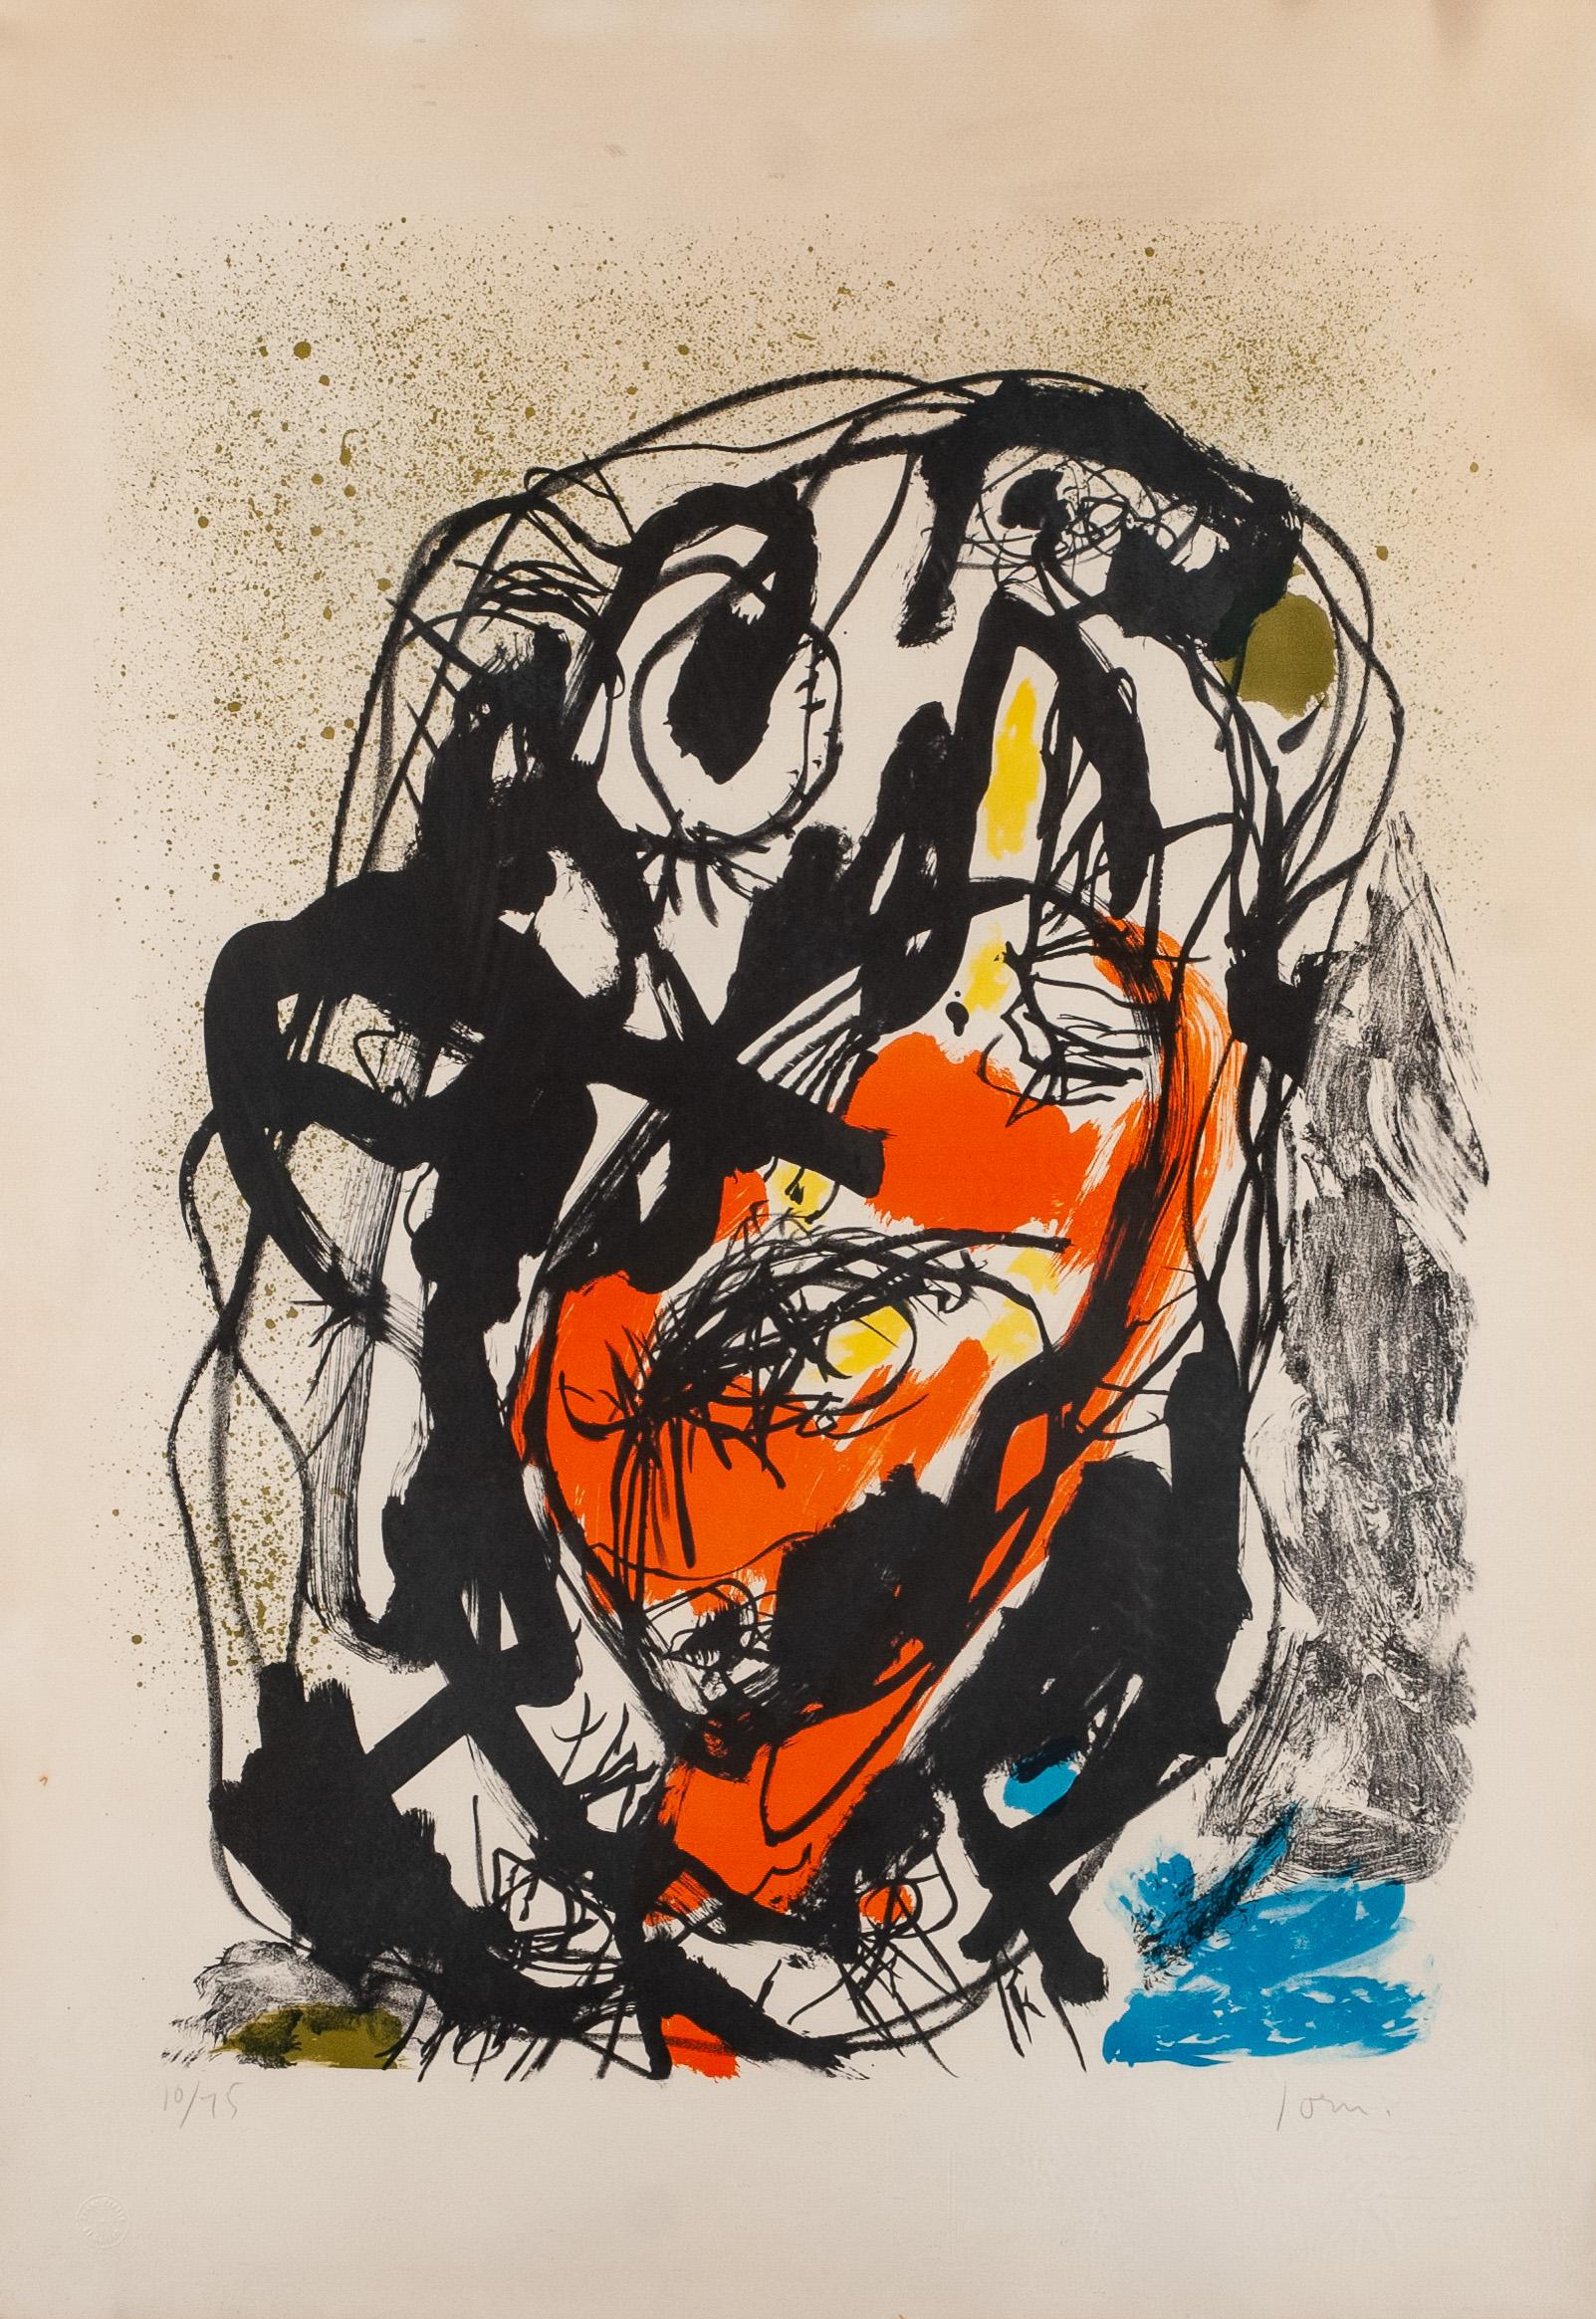 Asger Jorn Abstract Print - Von Kopf bis Fuss (From Head to Toe) 10/75